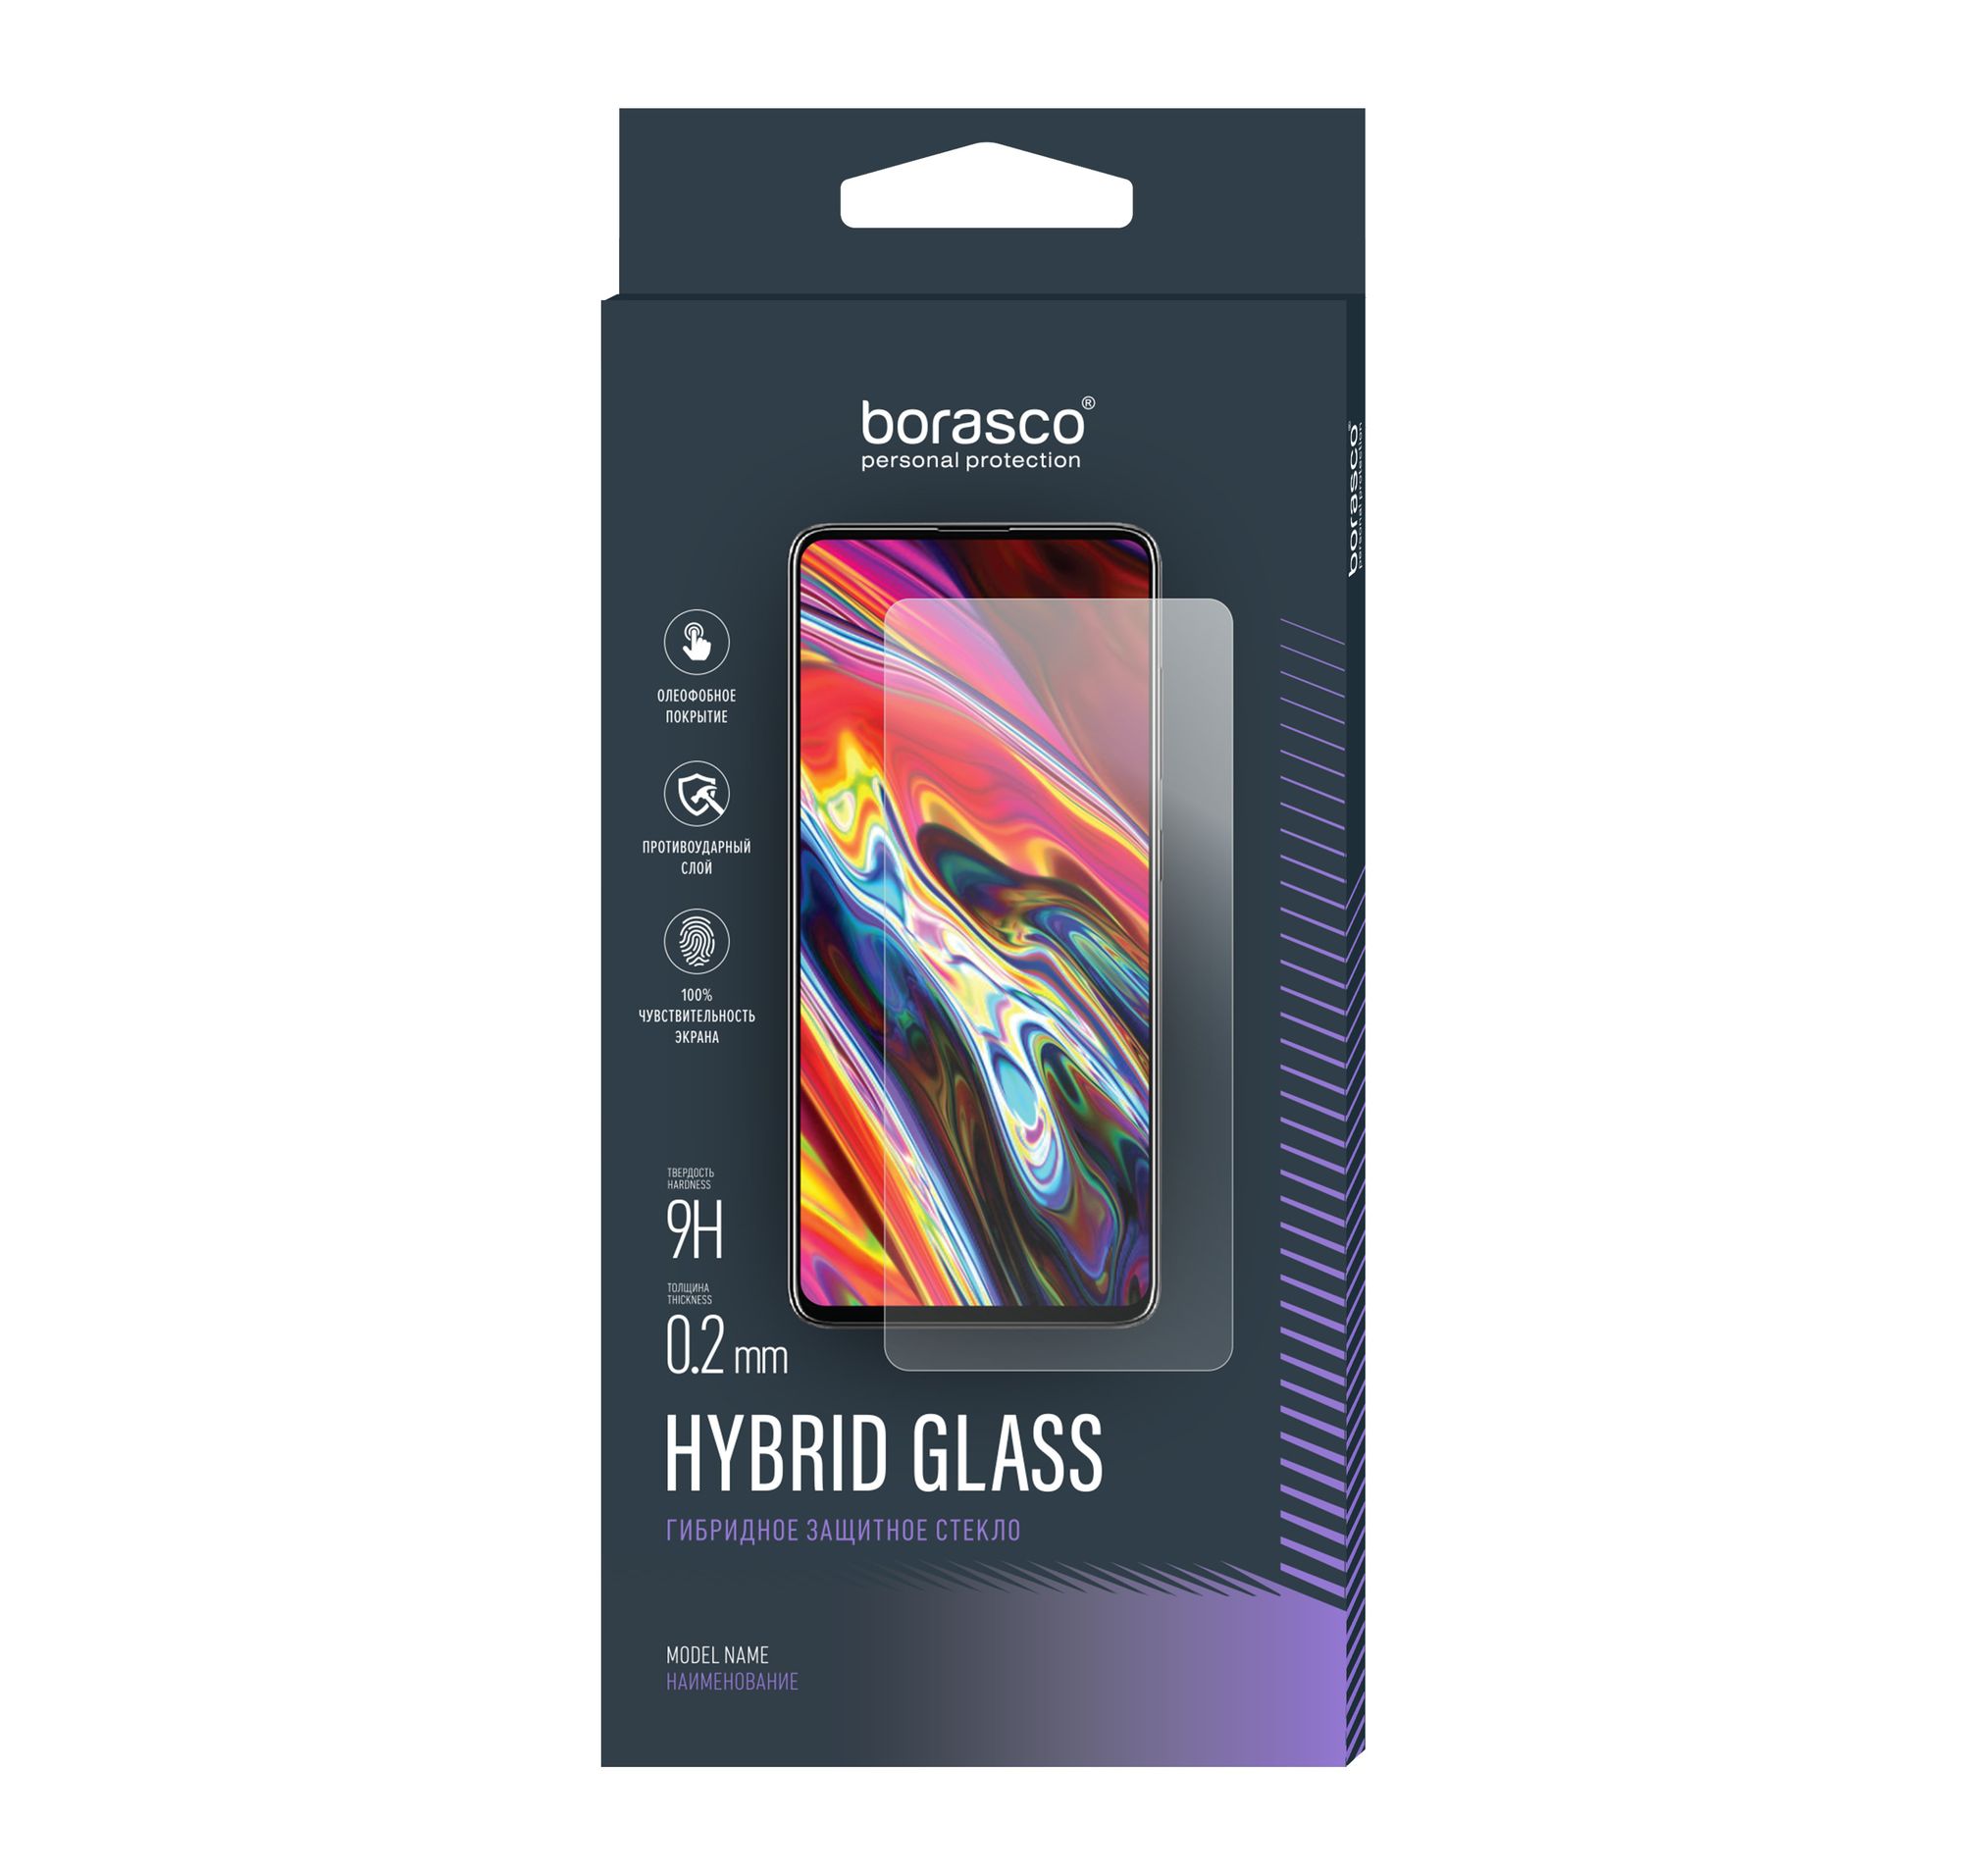 Стекло защитное Hybrid Glass VSP 0,26 мм для Lenovo Yoga Tab 3 Pro 10 10 1 lcd прозрачная защита для экрана для lenovo yoga tab 3 10 plus x703 x703f yt x703l yt x703x жк дисплей экран для lenovo x703 запасная часть для замены процессора изобр